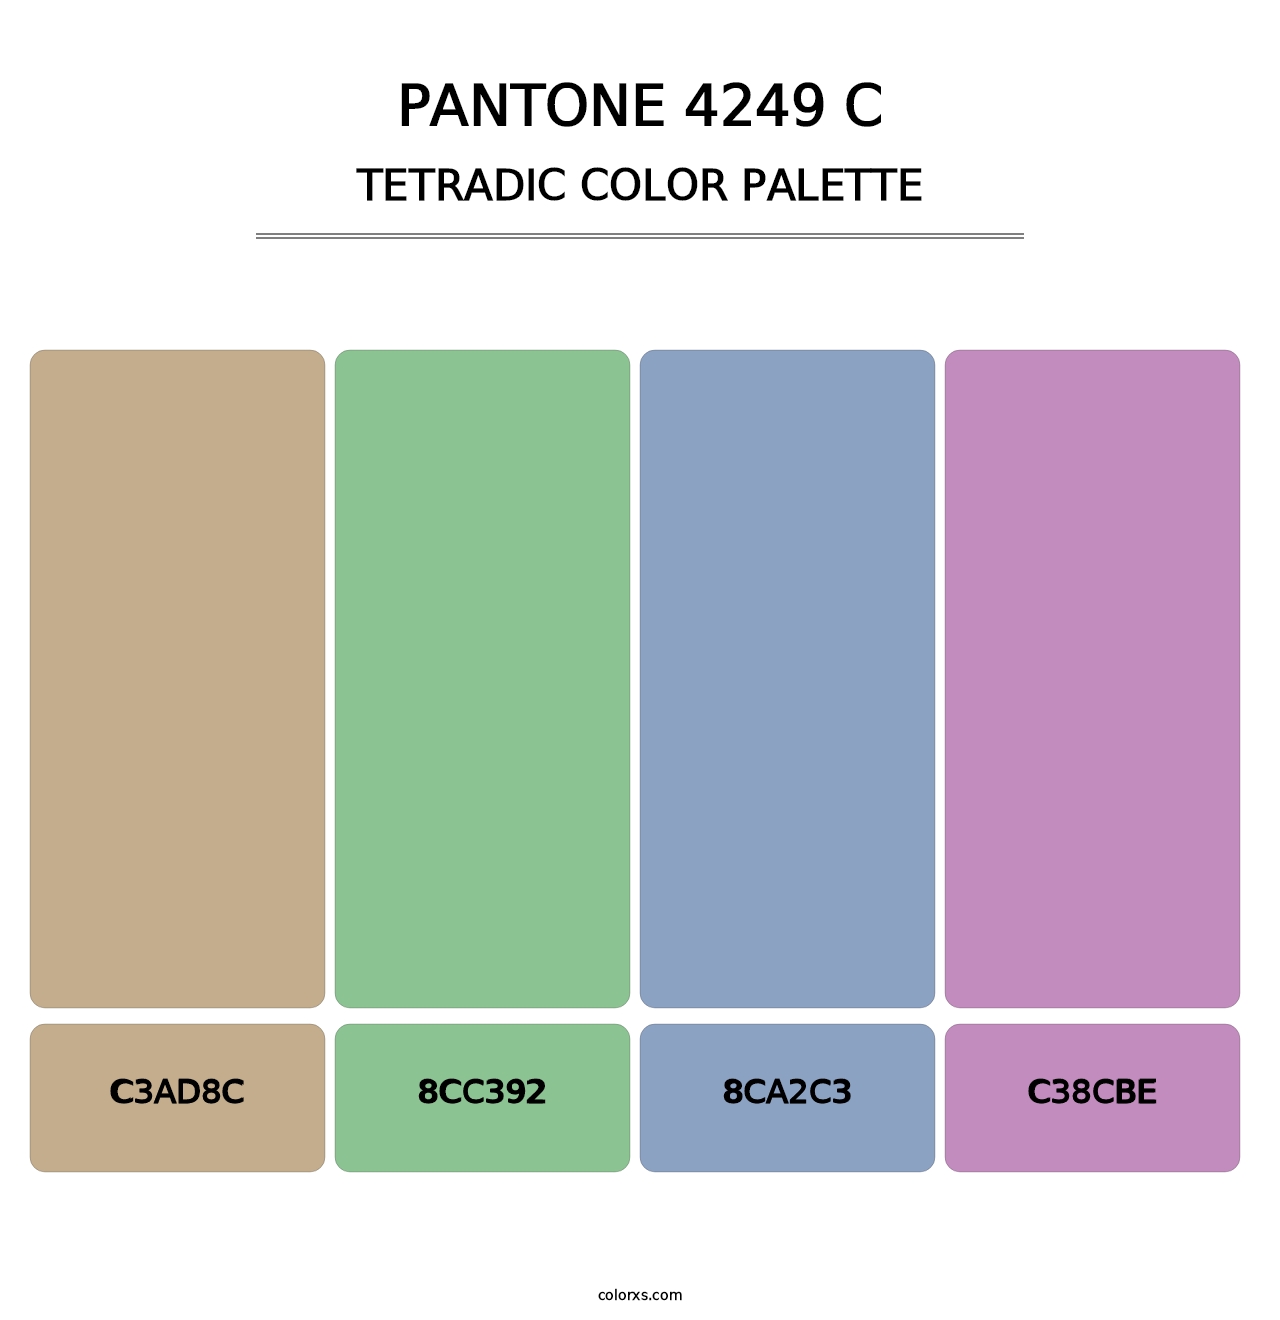 PANTONE 4249 C - Tetradic Color Palette